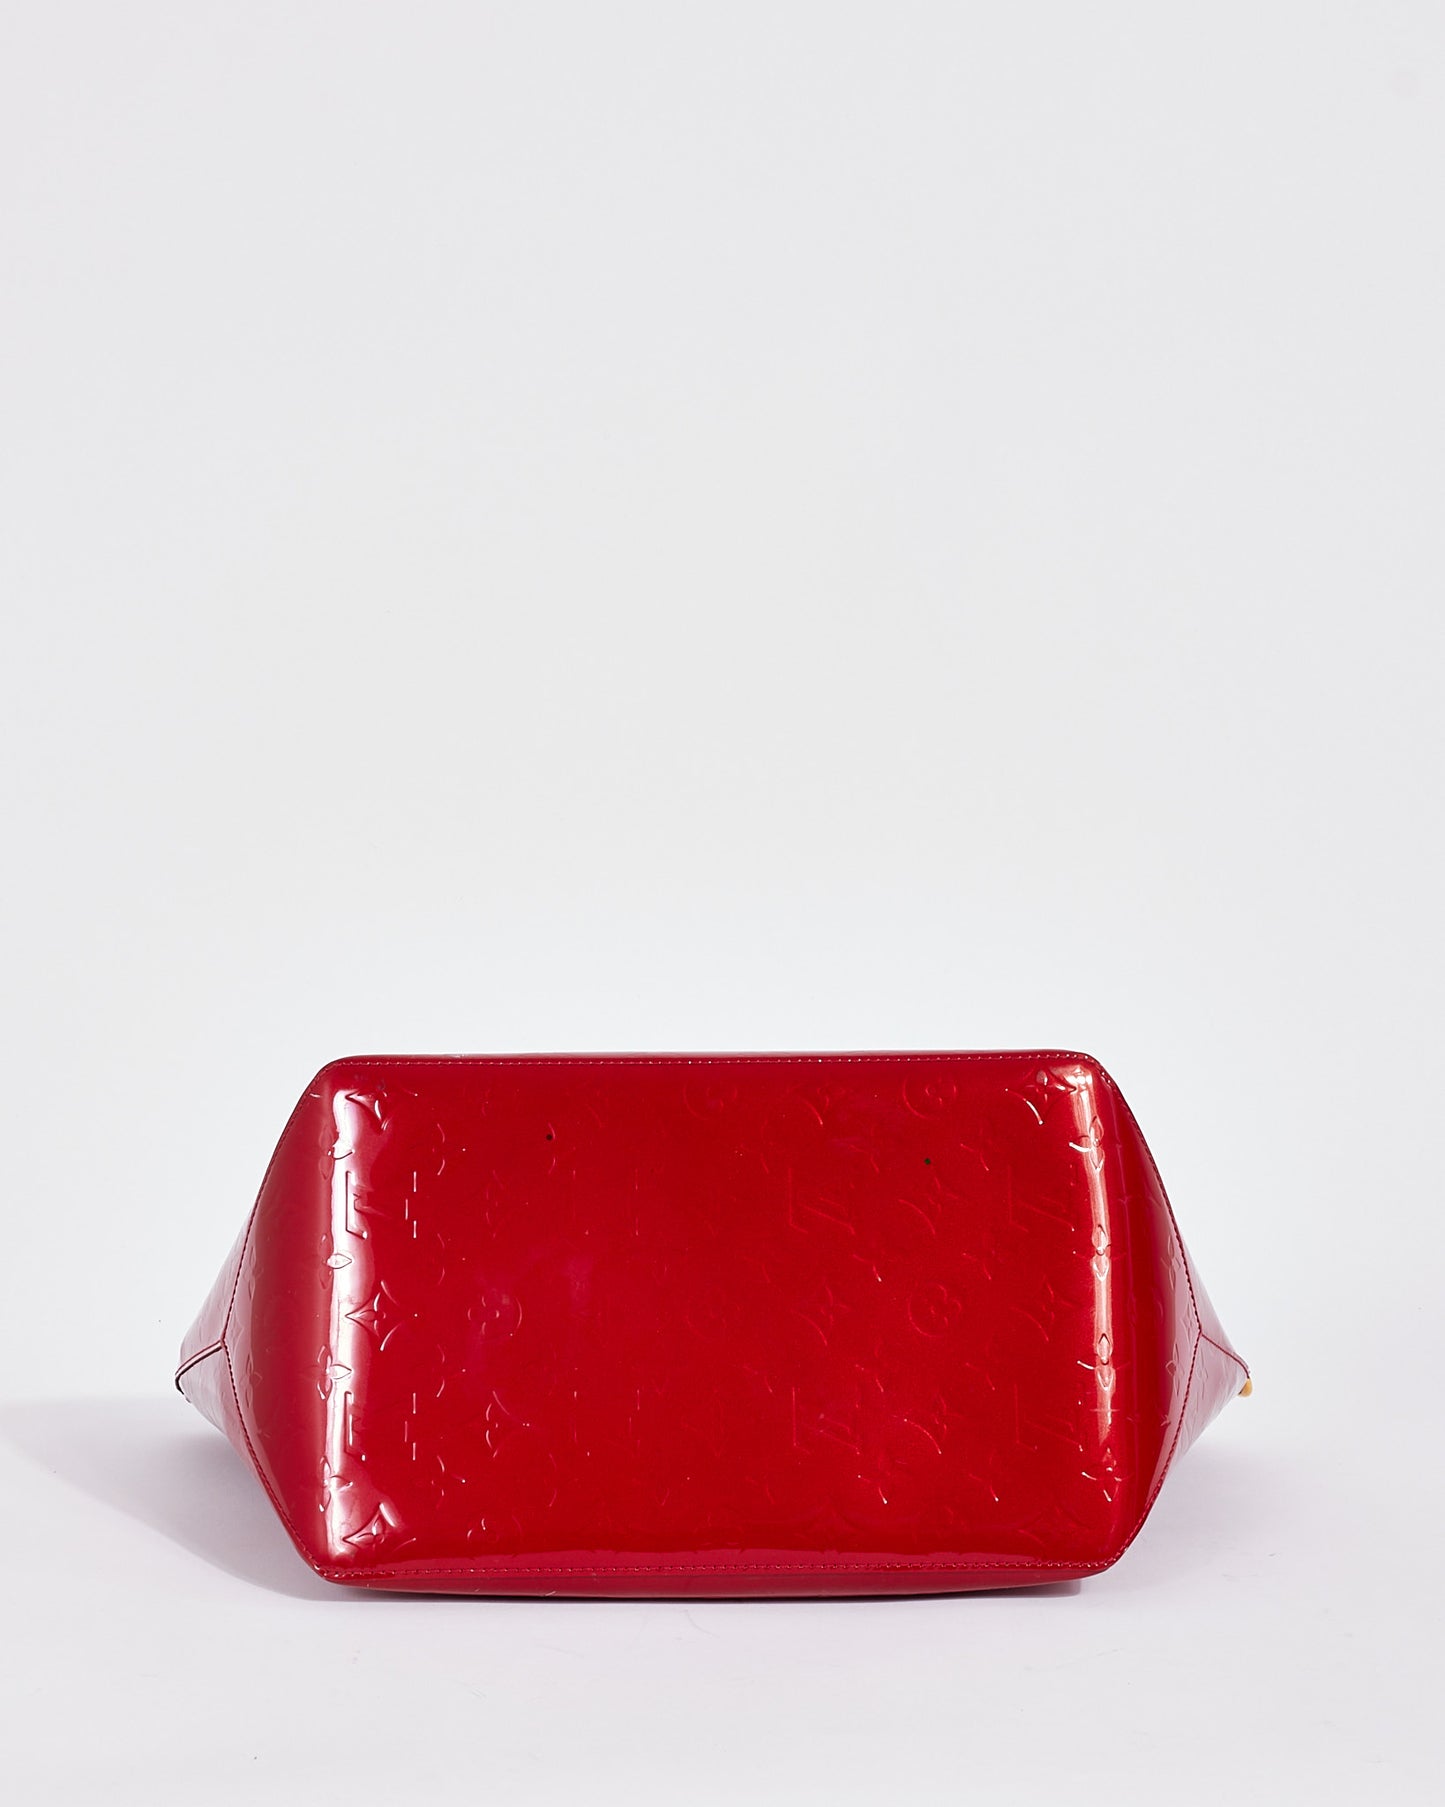 Louis Vuitton Red (Pomme D'Amour) Monogram Vernis Bellevue GM Tote